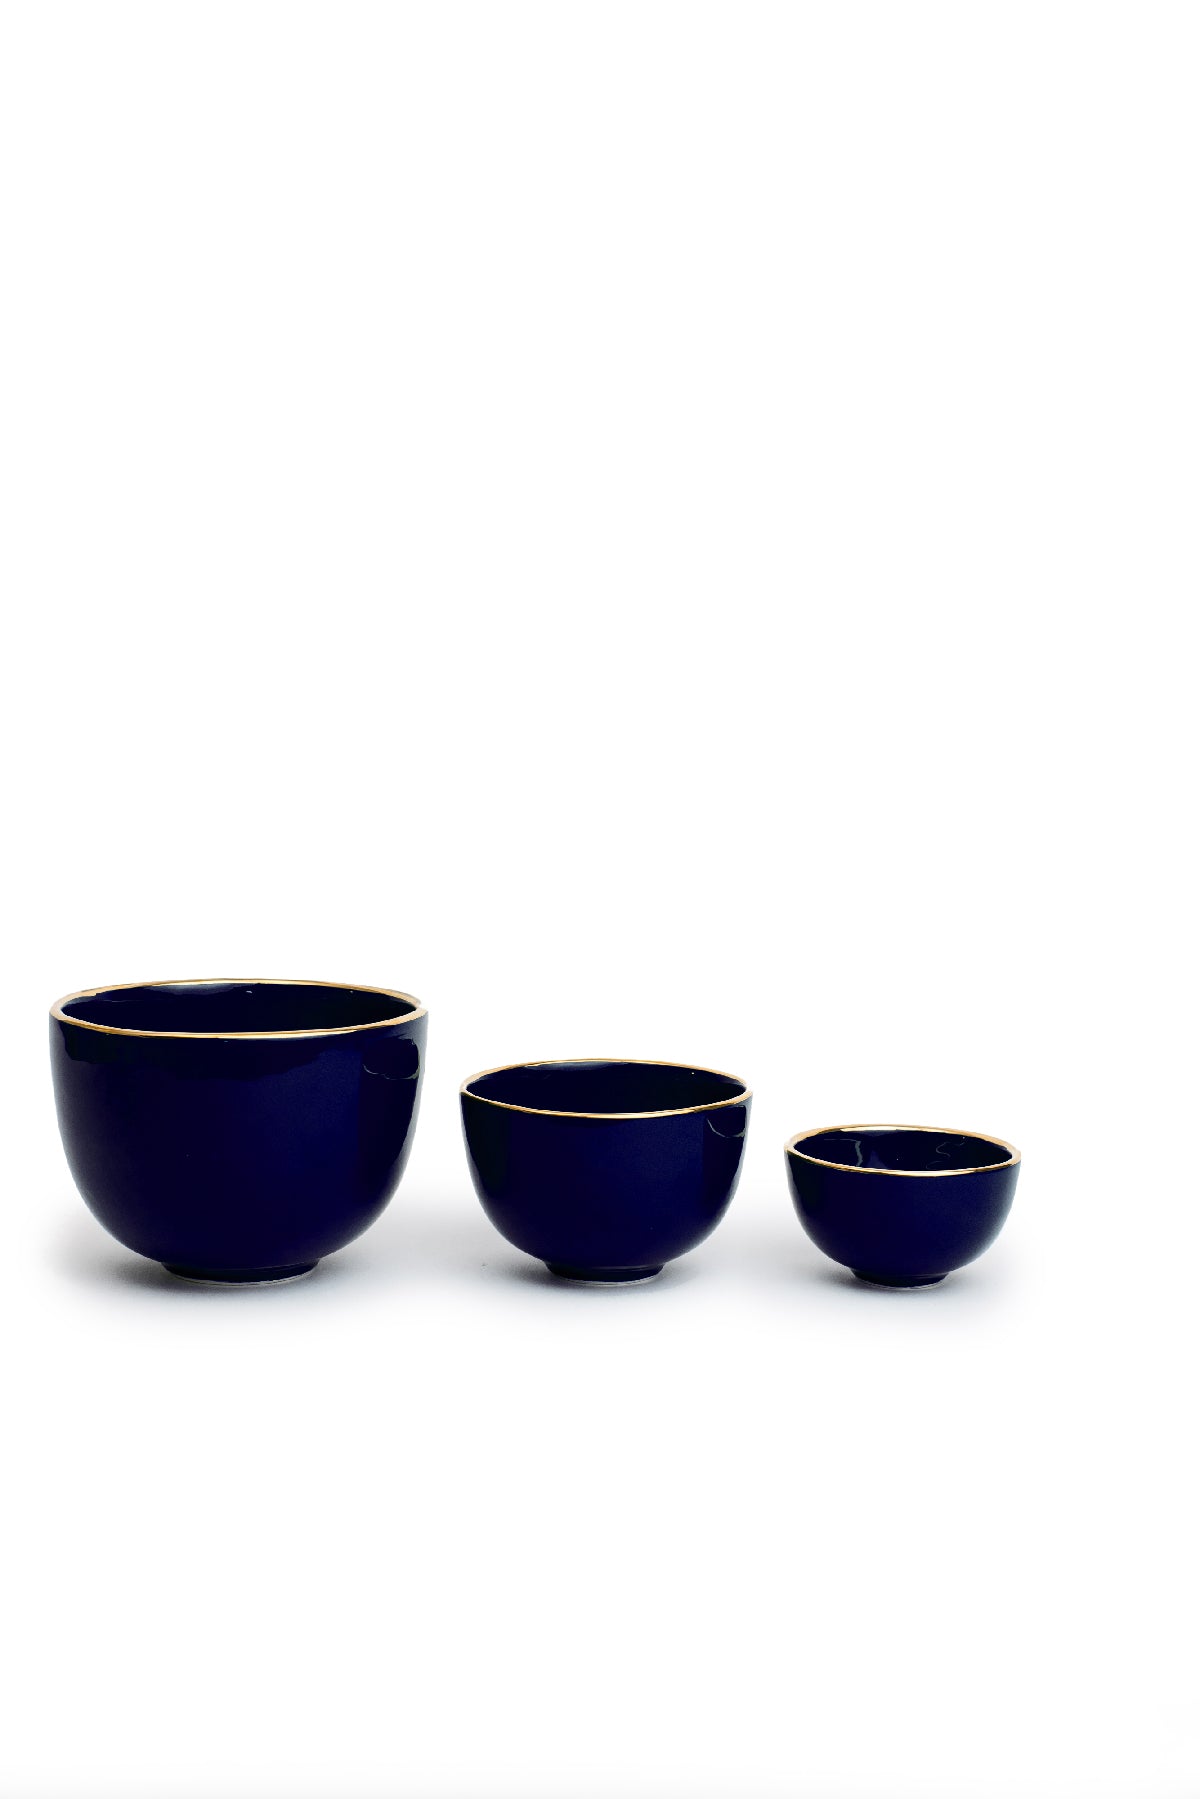 Minimalist Blue Bowl with Gold Edges